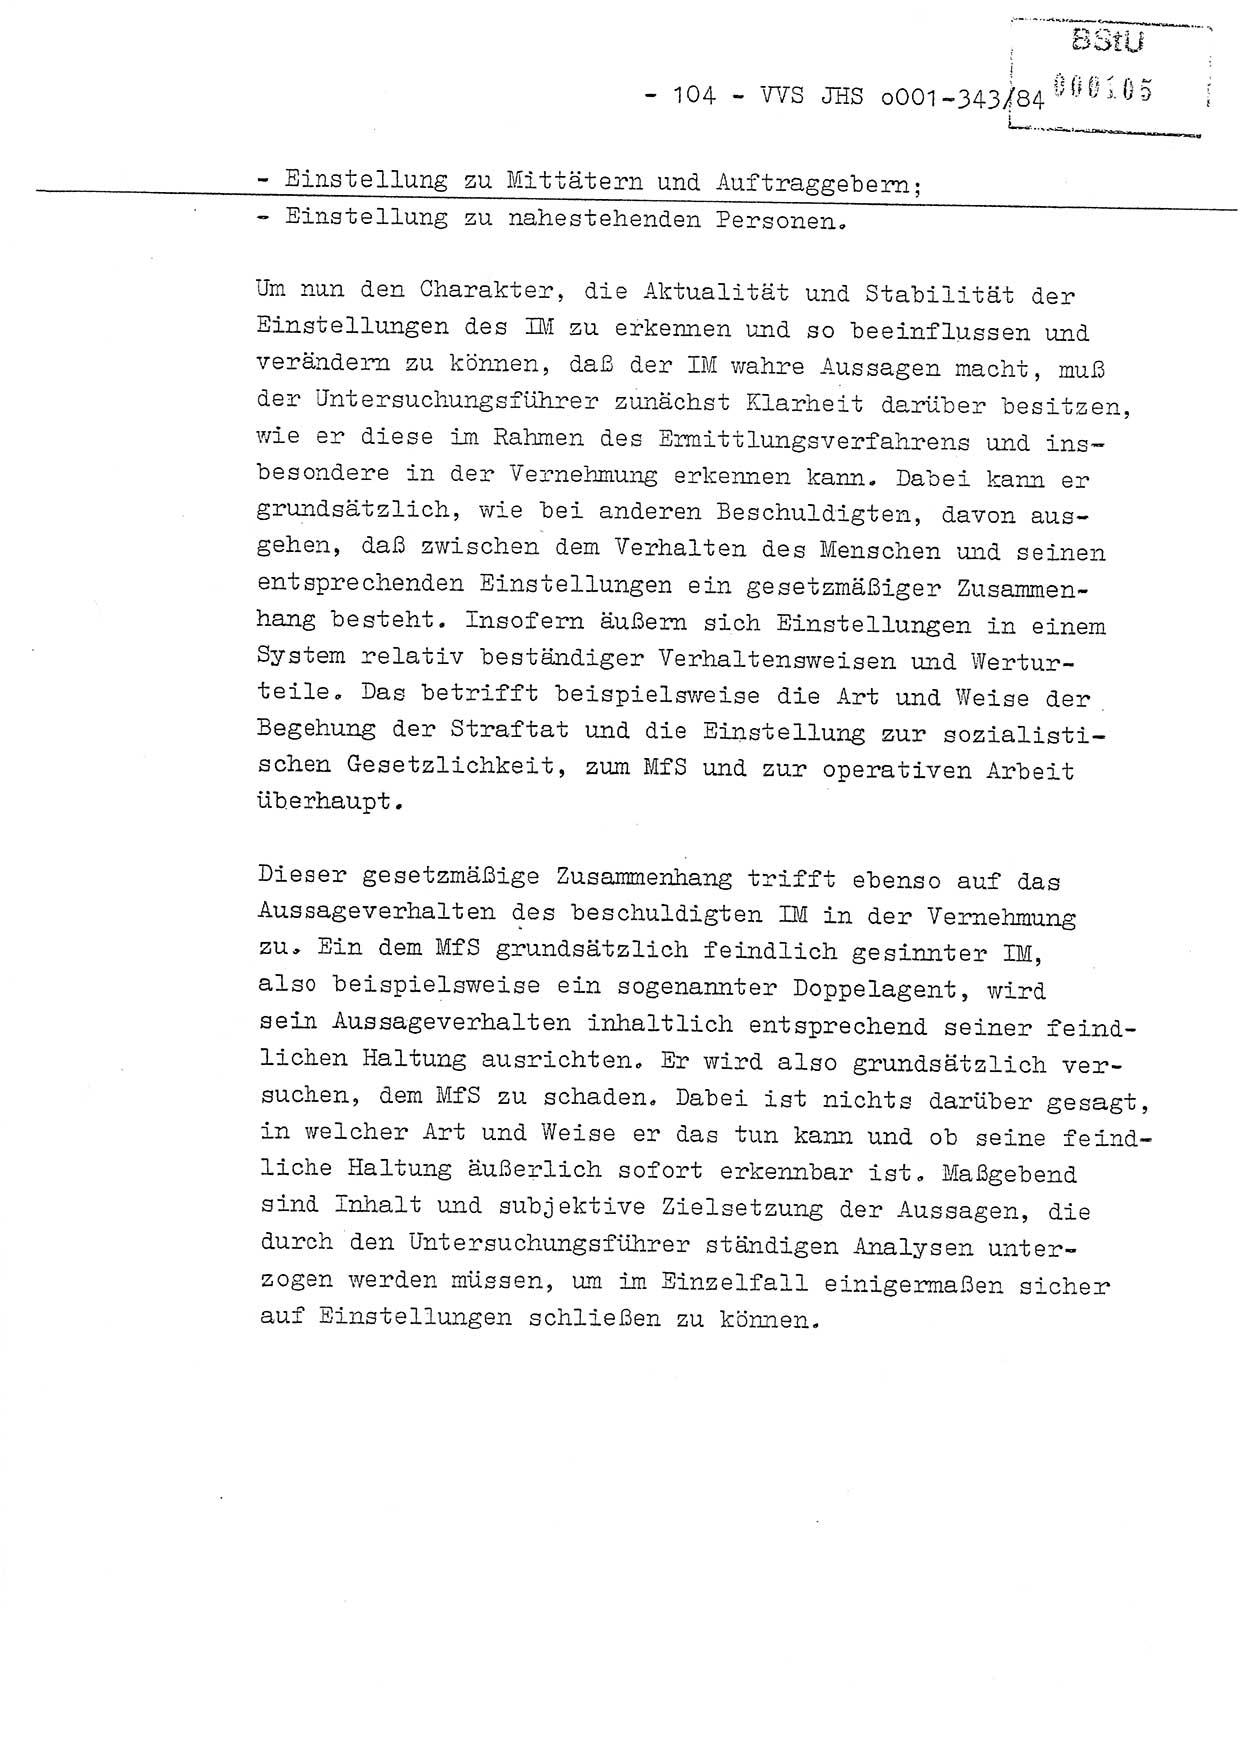 Diplomarbeit, Oberleutnant Bernd Michael (HA Ⅸ/5), Oberleutnant Peter Felber (HA IX/5), Ministerium für Staatssicherheit (MfS) [Deutsche Demokratische Republik (DDR)], Juristische Hochschule (JHS), Vertrauliche Verschlußsache (VVS) o001-343/84, Potsdam 1985, Seite 104 (Dipl.-Arb. MfS DDR JHS VVS o001-343/84 1985, S. 104)